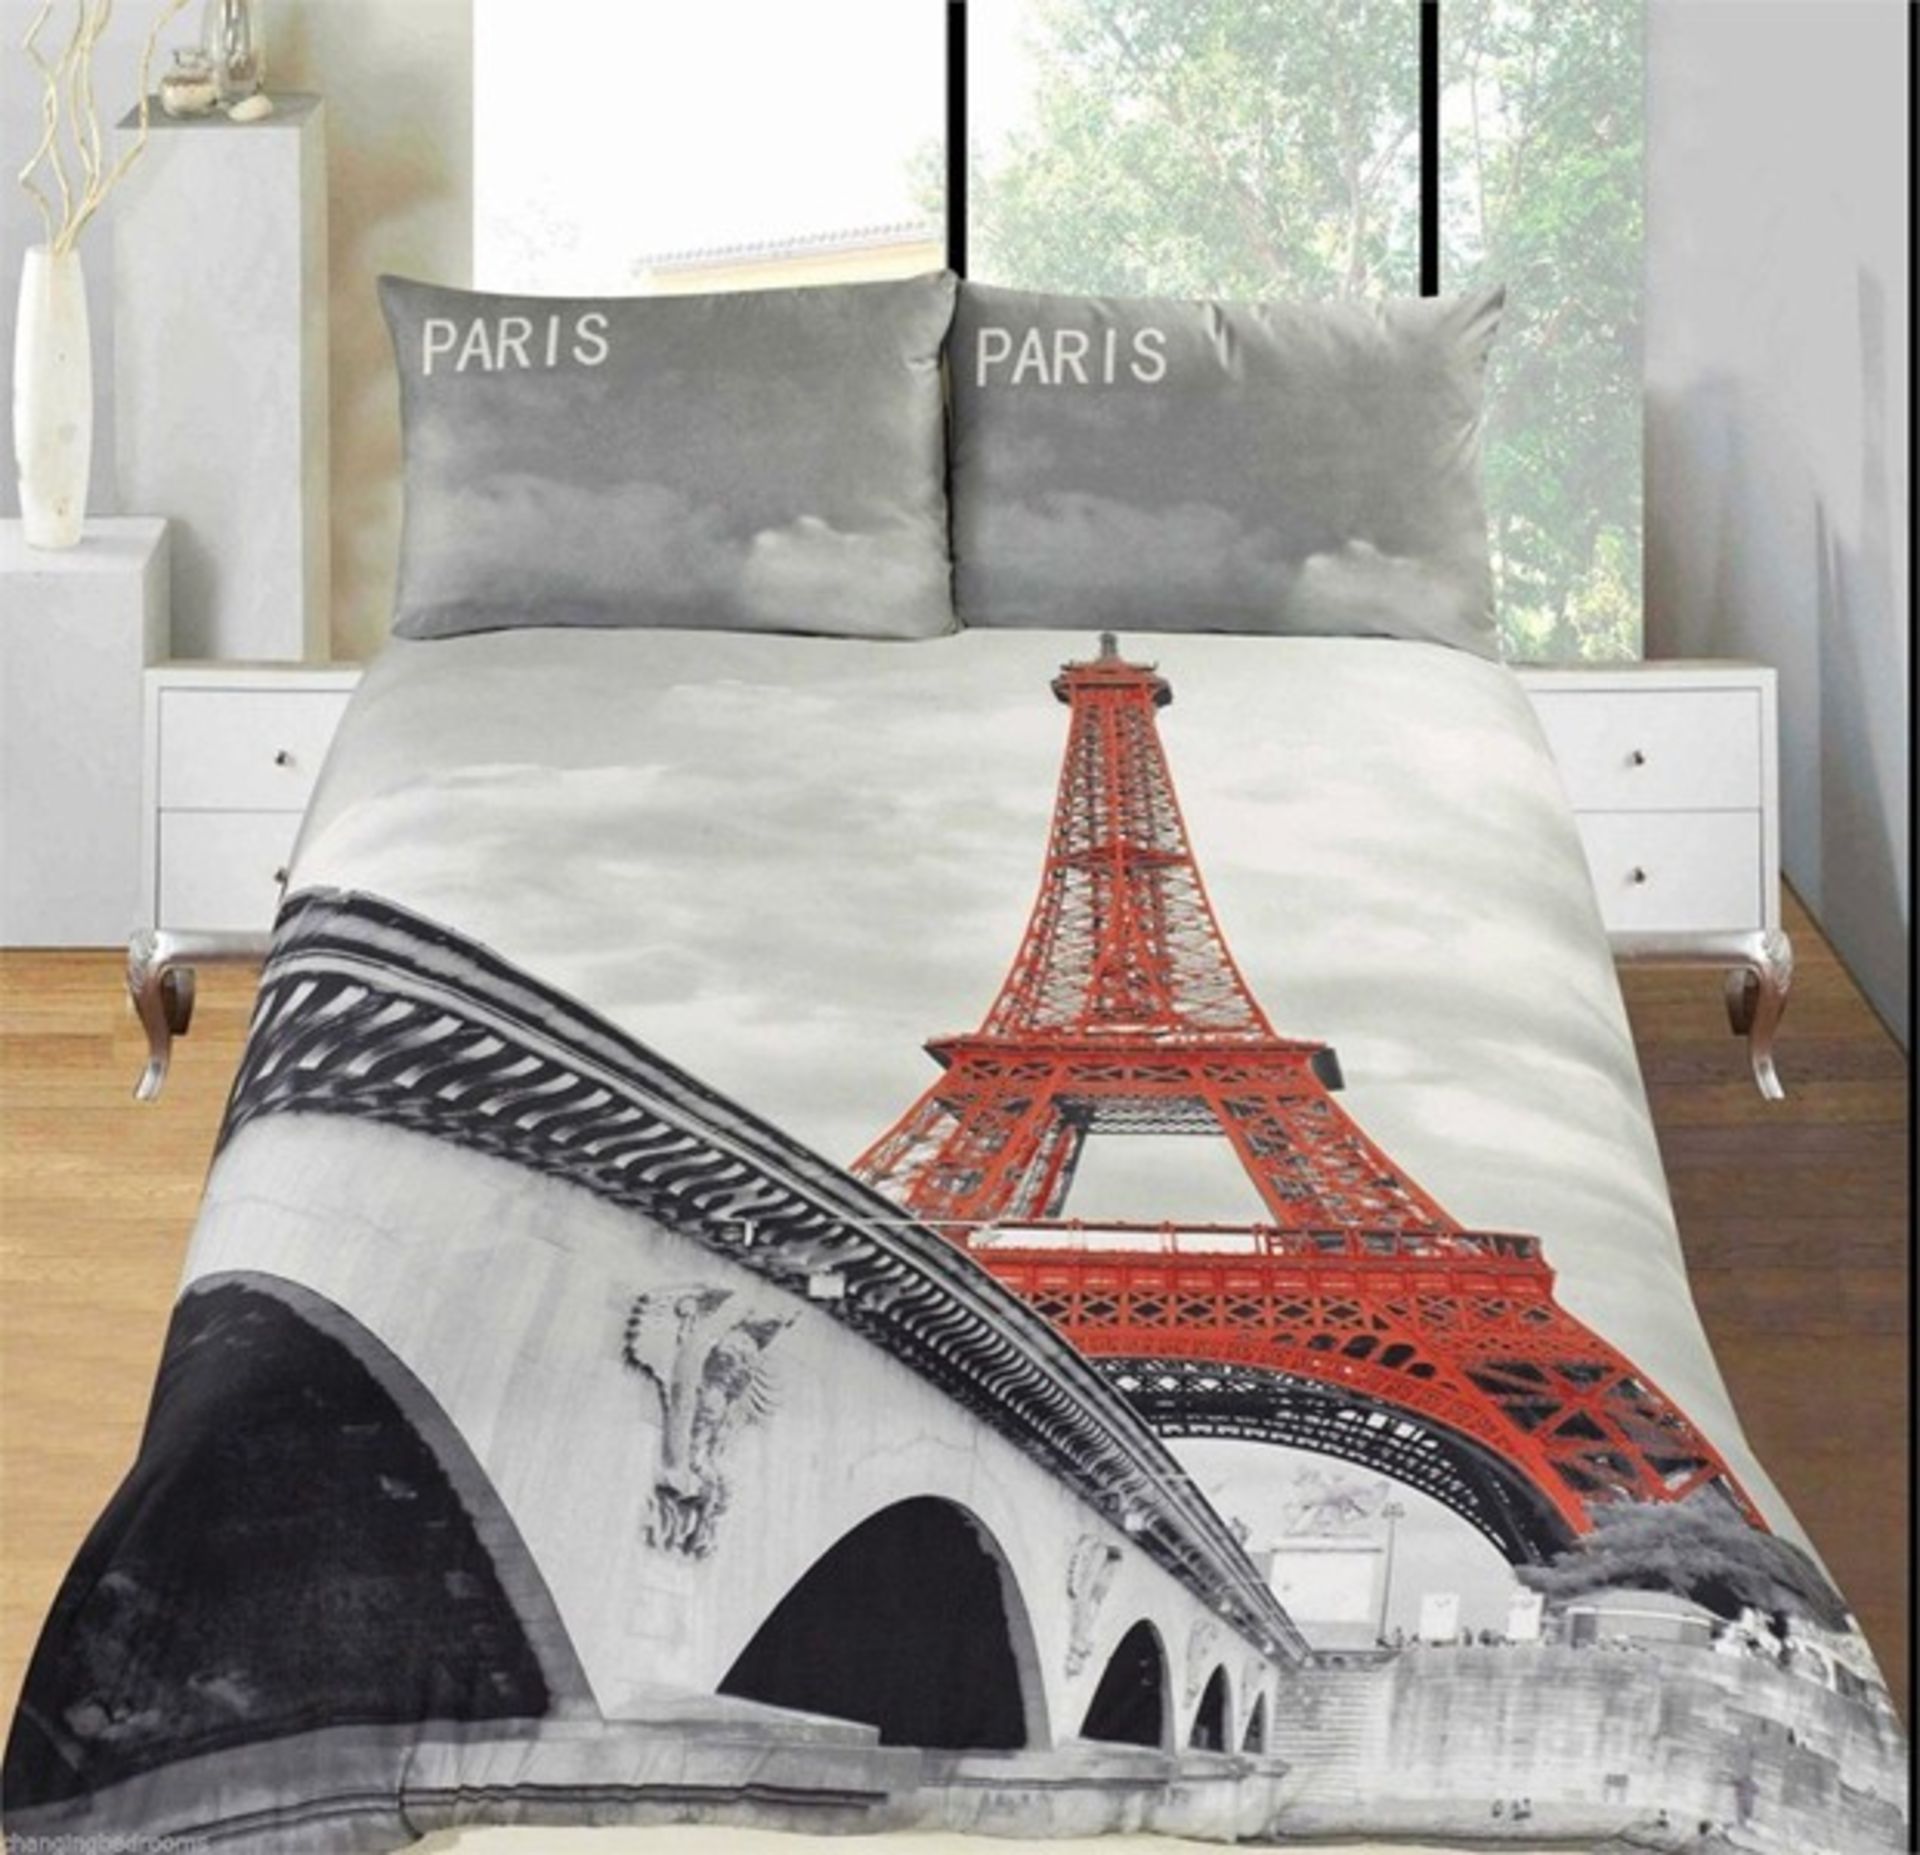 V *TRADE QTY* Brand New Double Bed Luxury Three Piece Duvet Set-Eifel Tower X 12 YOUR BID PRICE TO